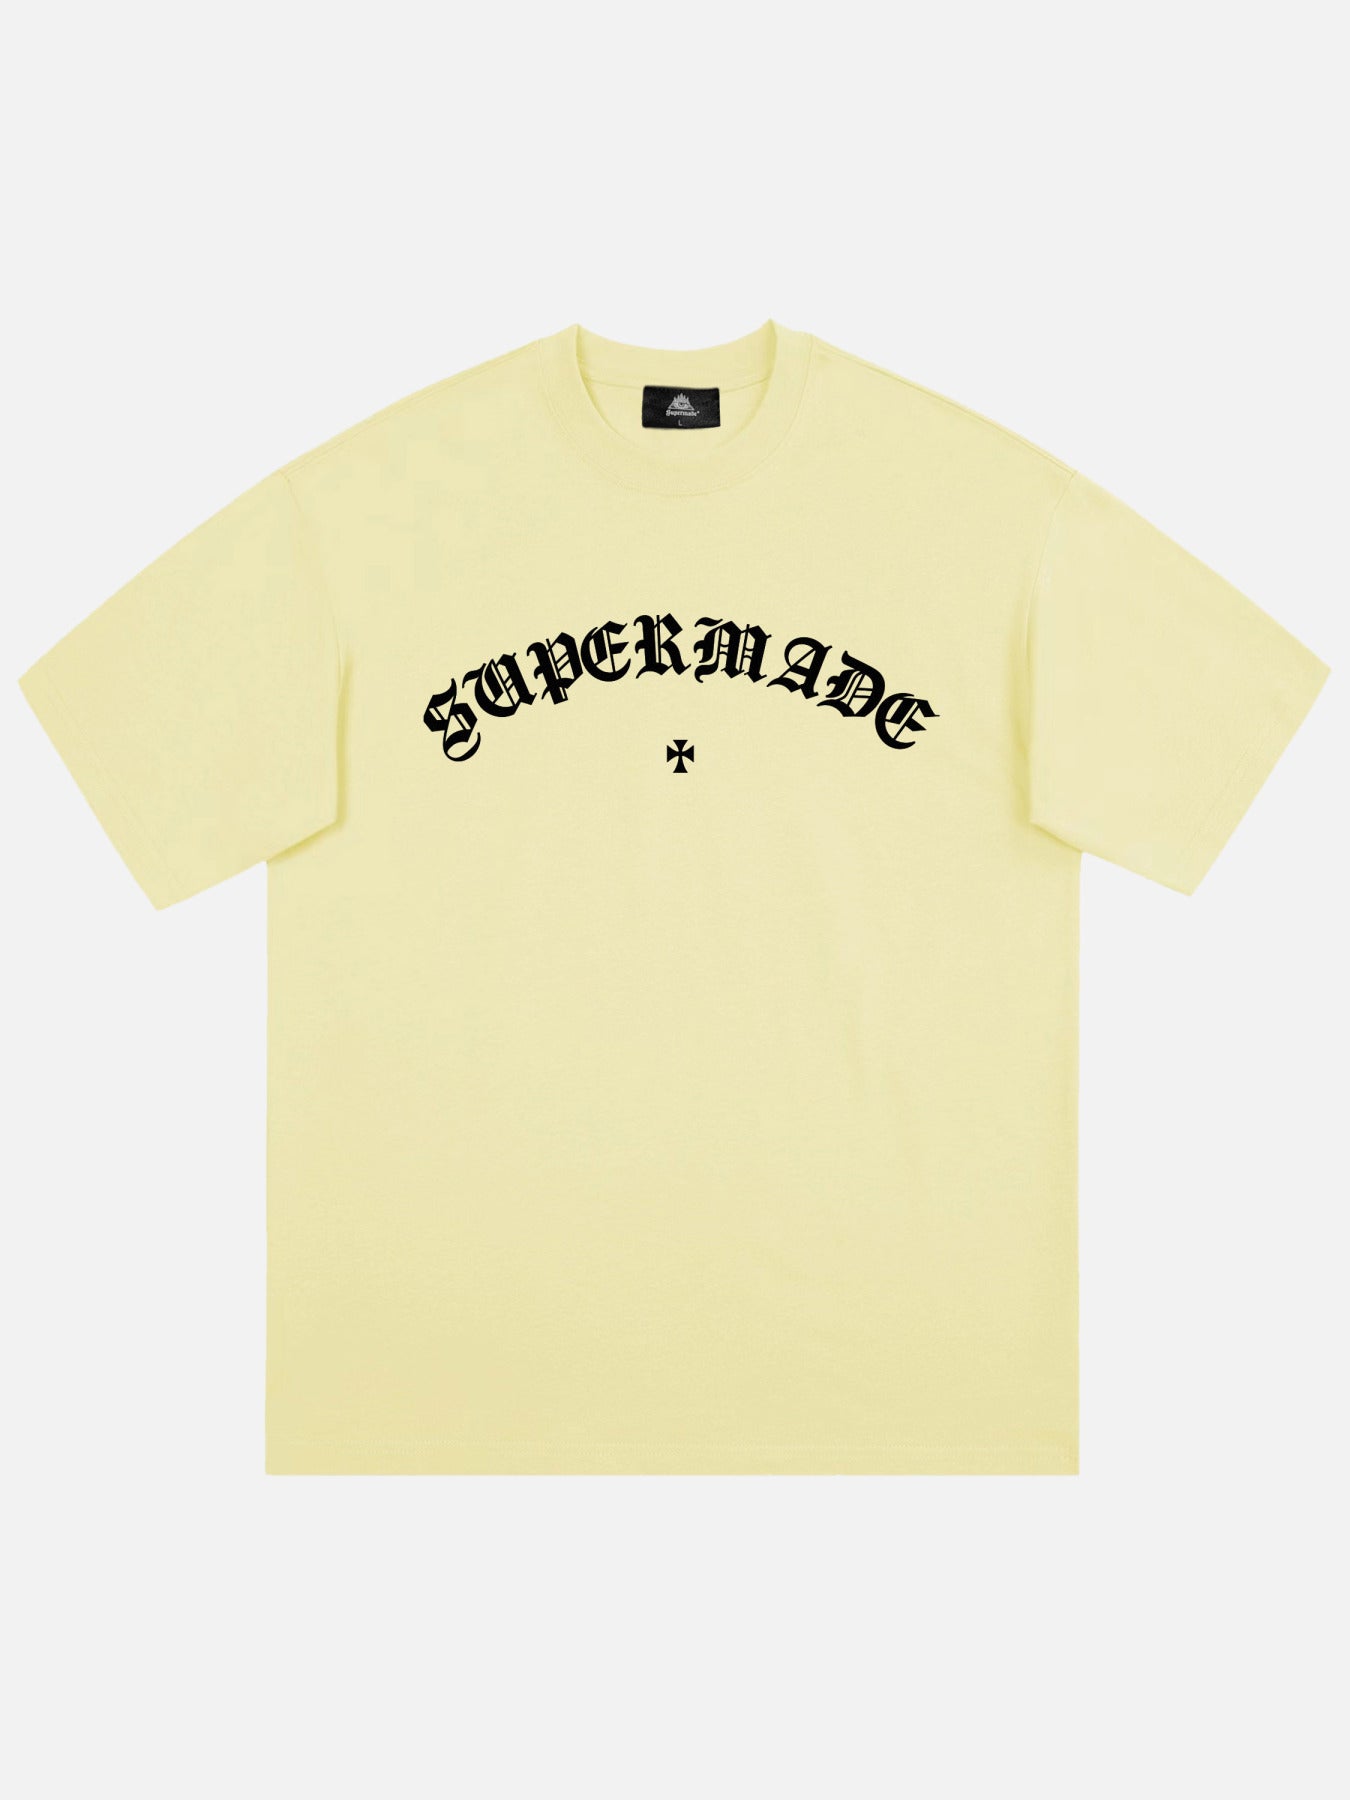 The Supermade Logo Print T-shirt